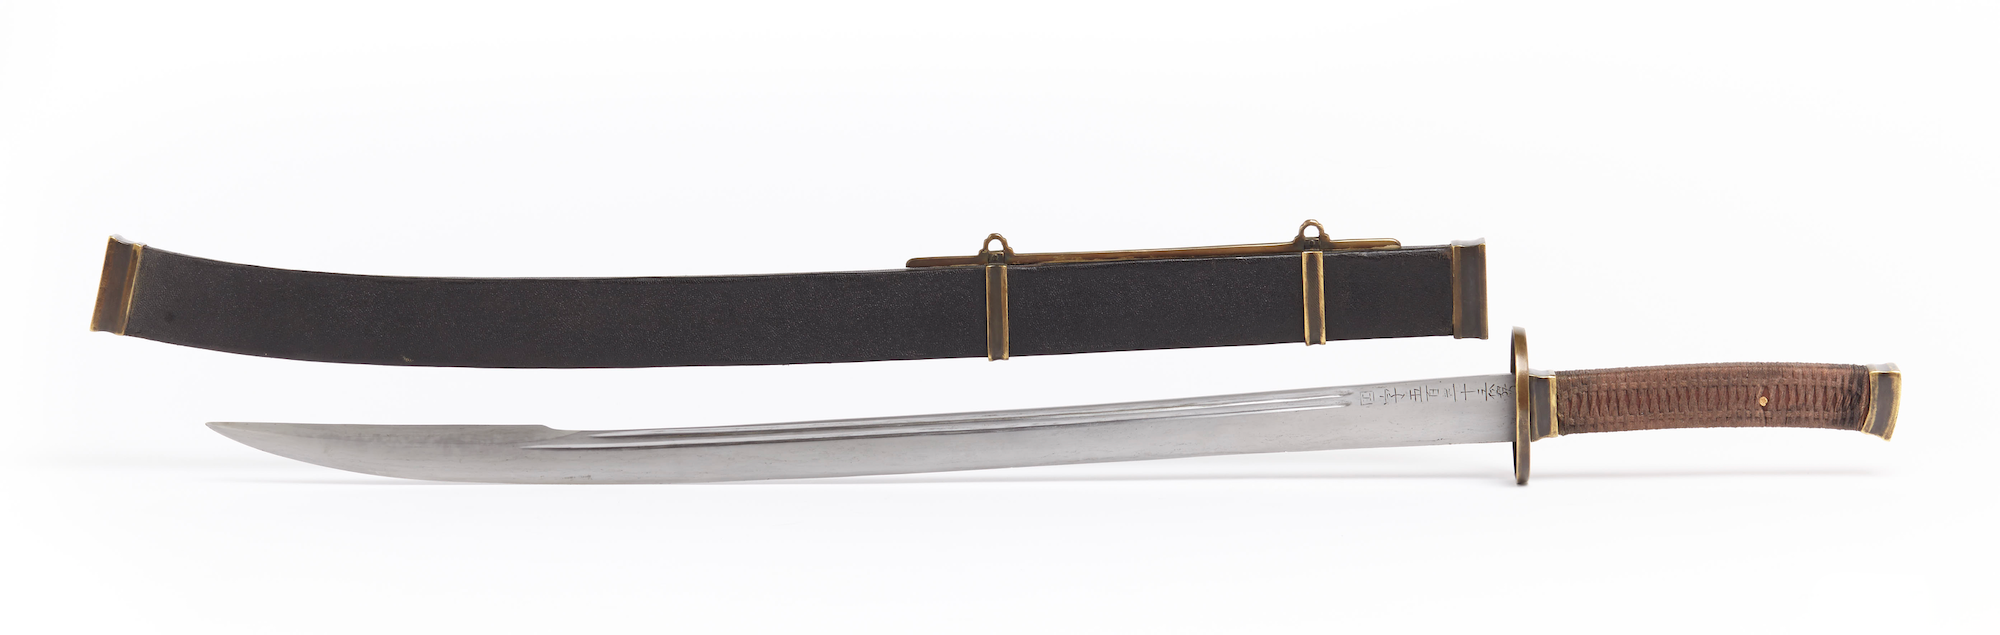 A 17th century manchu saber